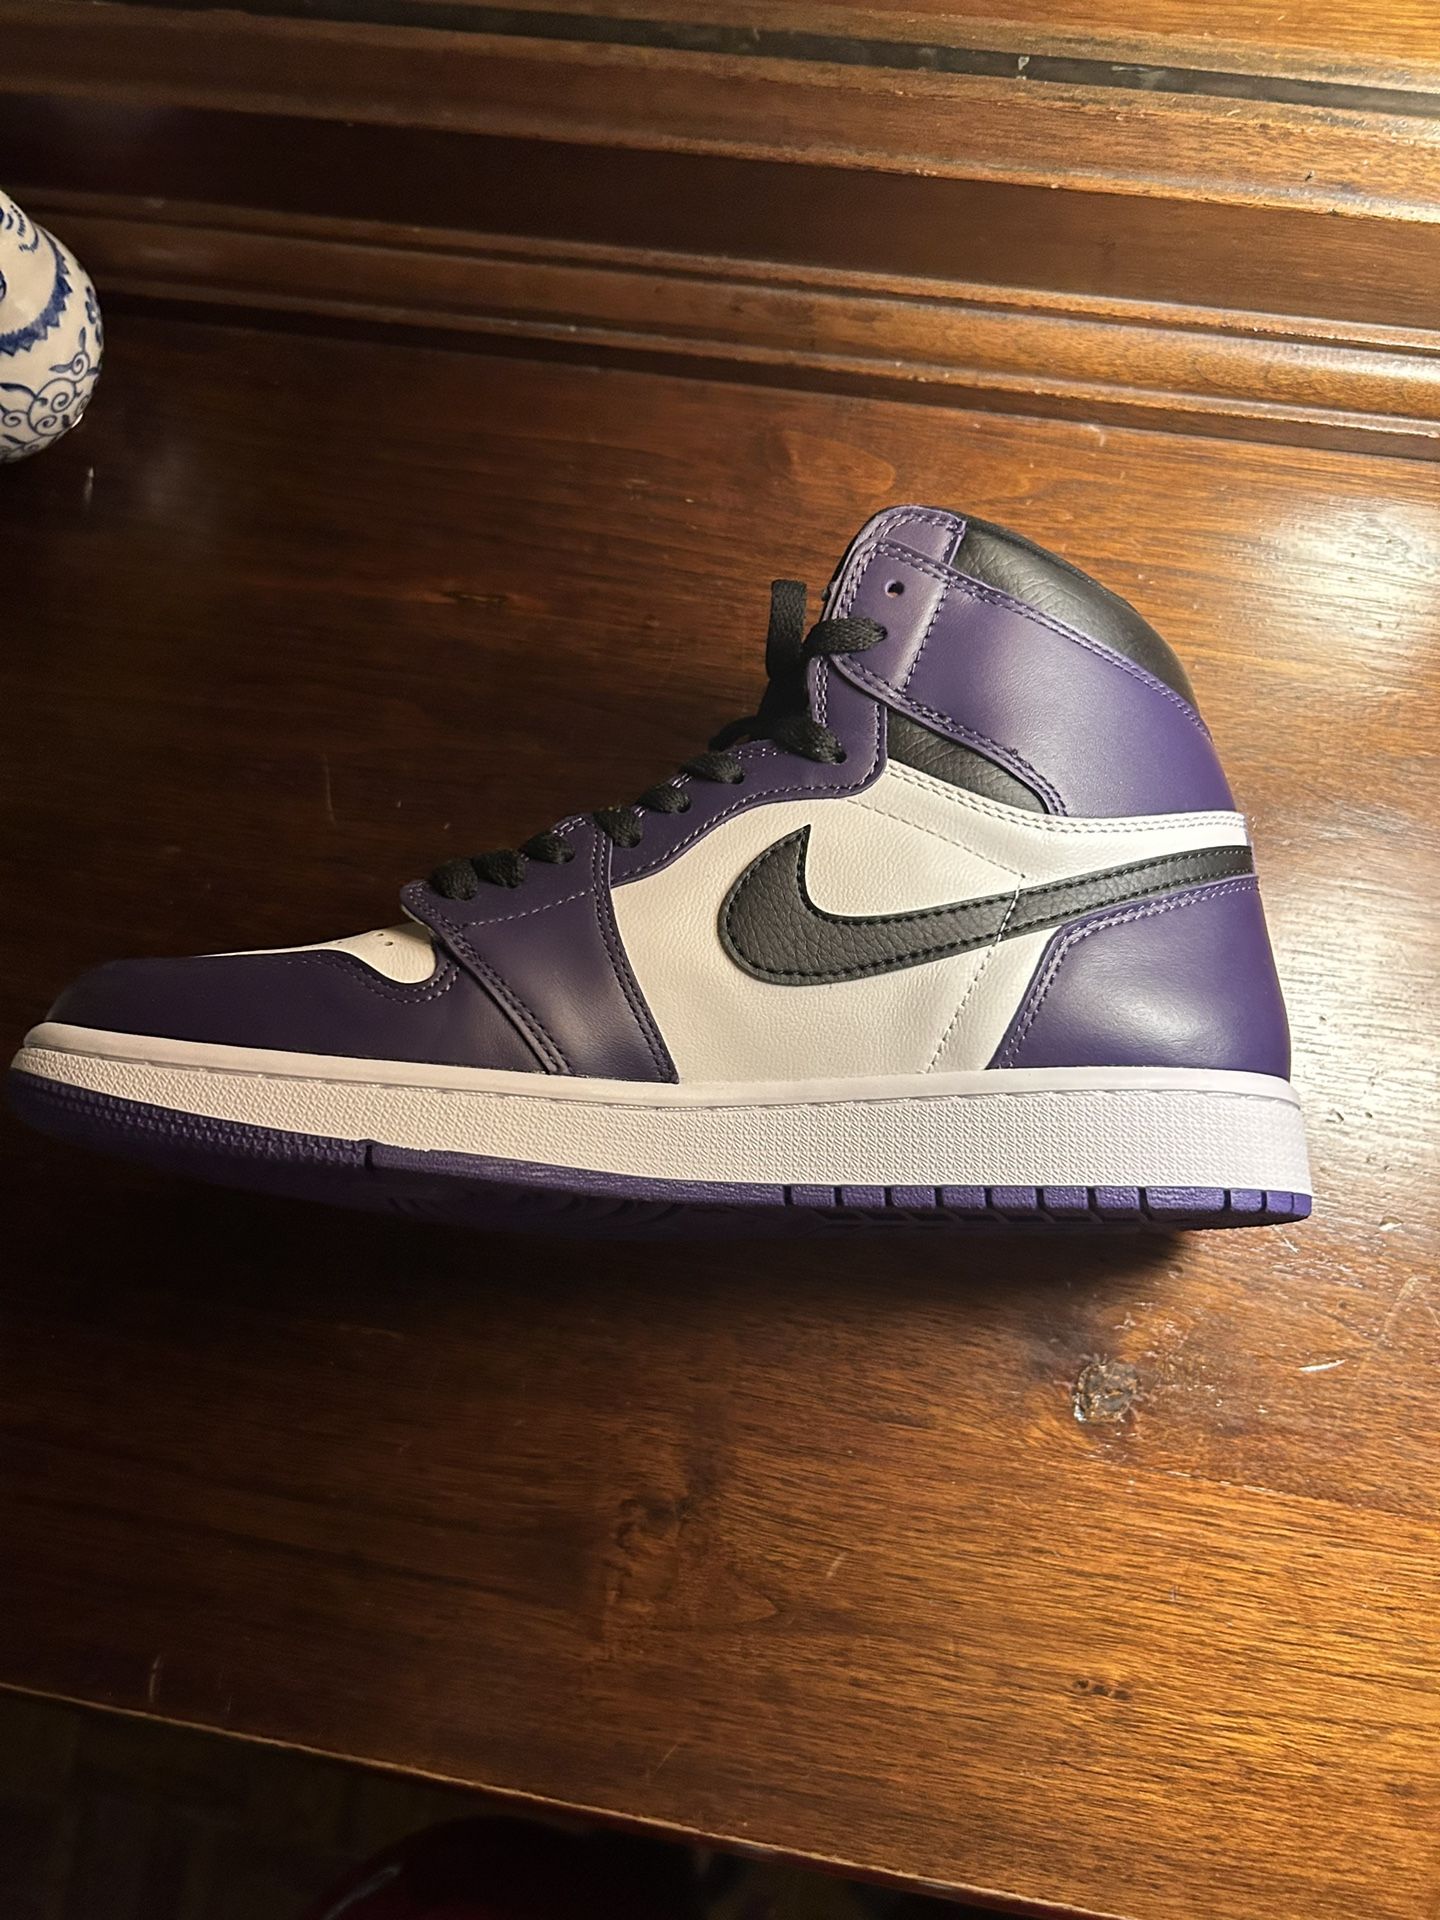 Jordan 1 high Court purple